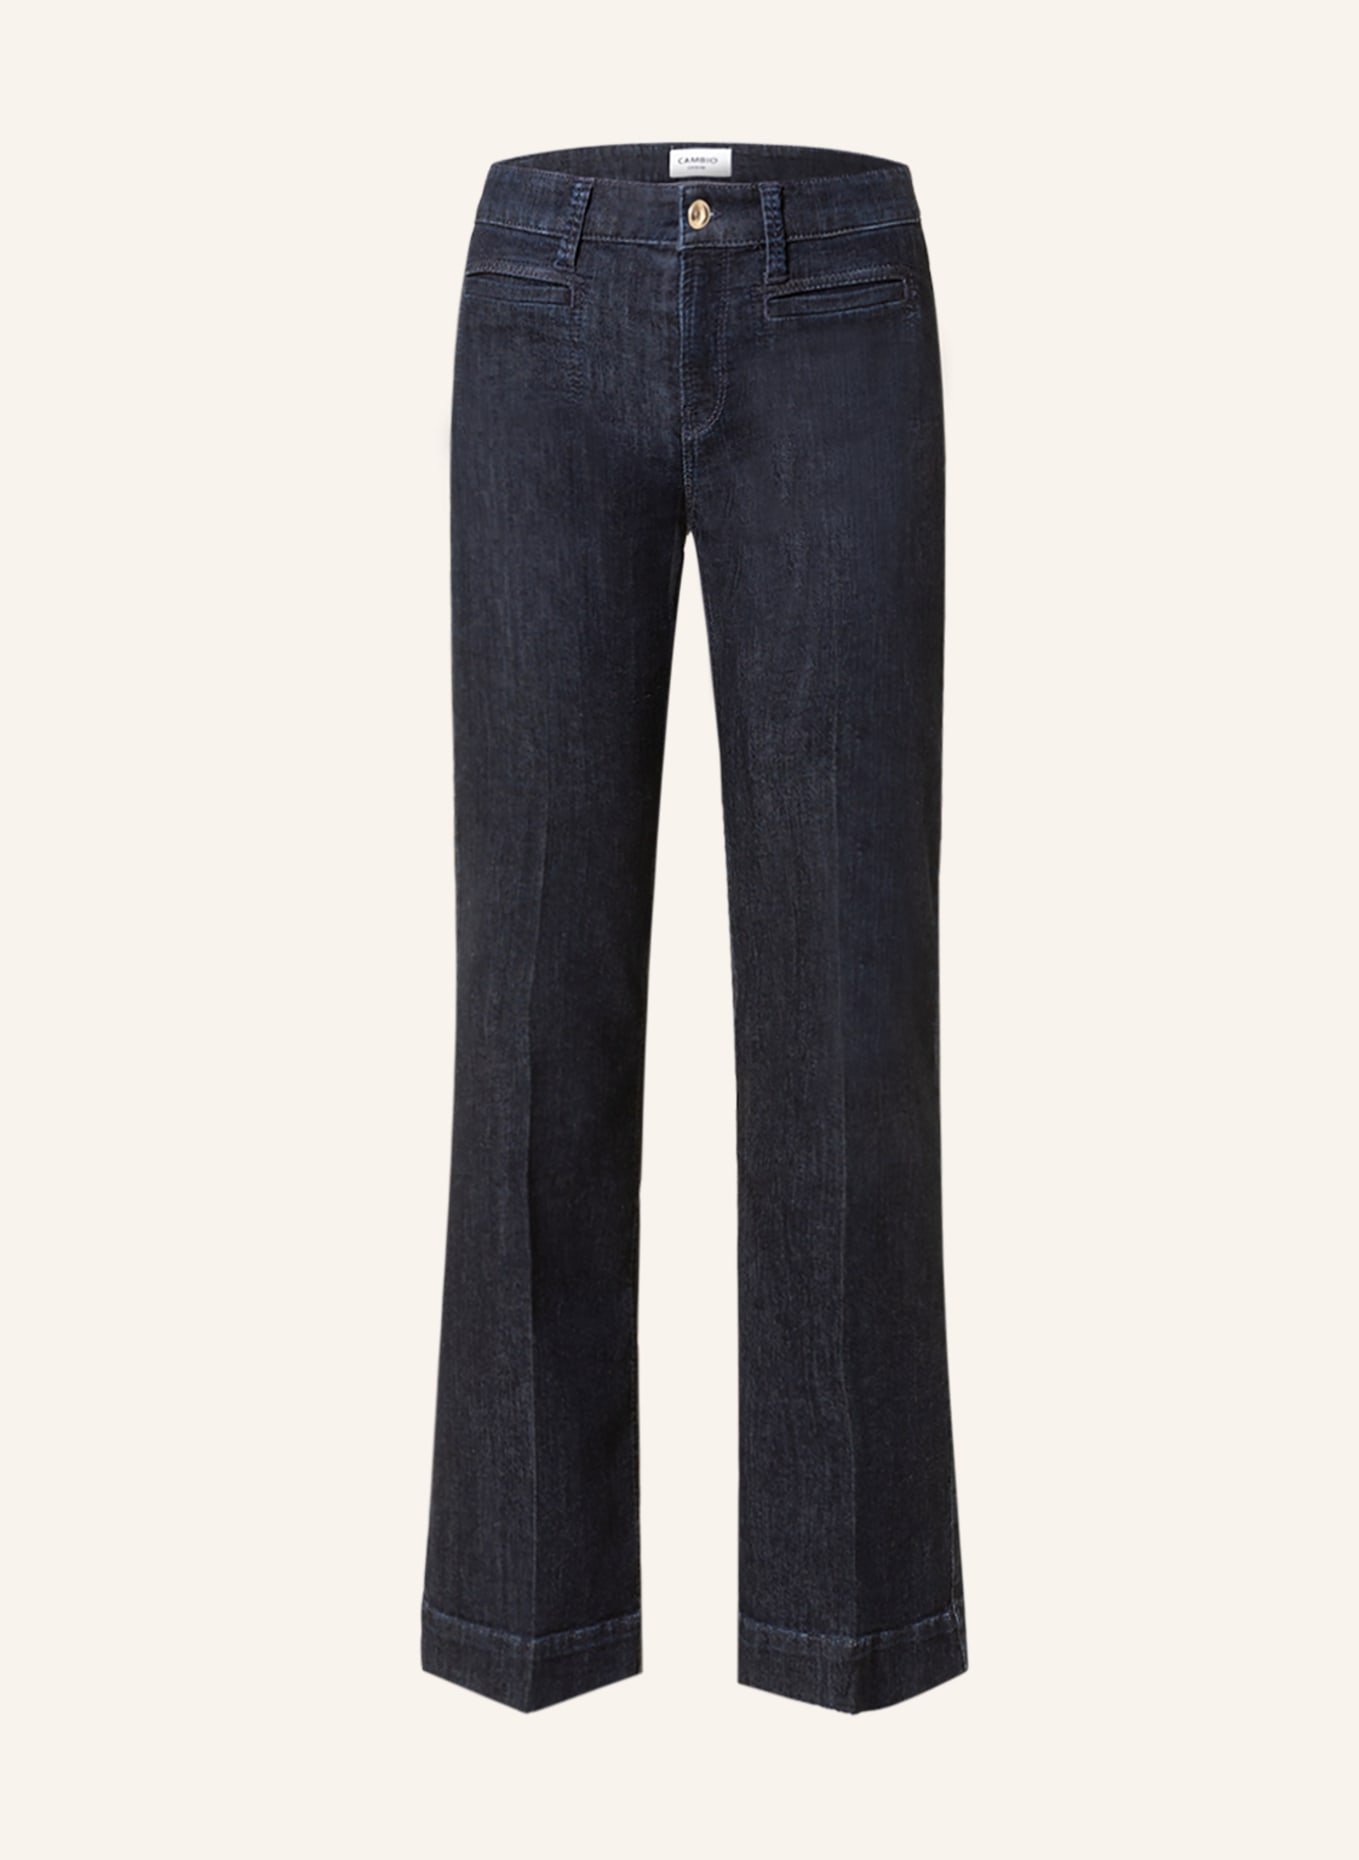 CAMBIO Jeans TESS, Farbe: 5006 modern rinsed (Bild 1)